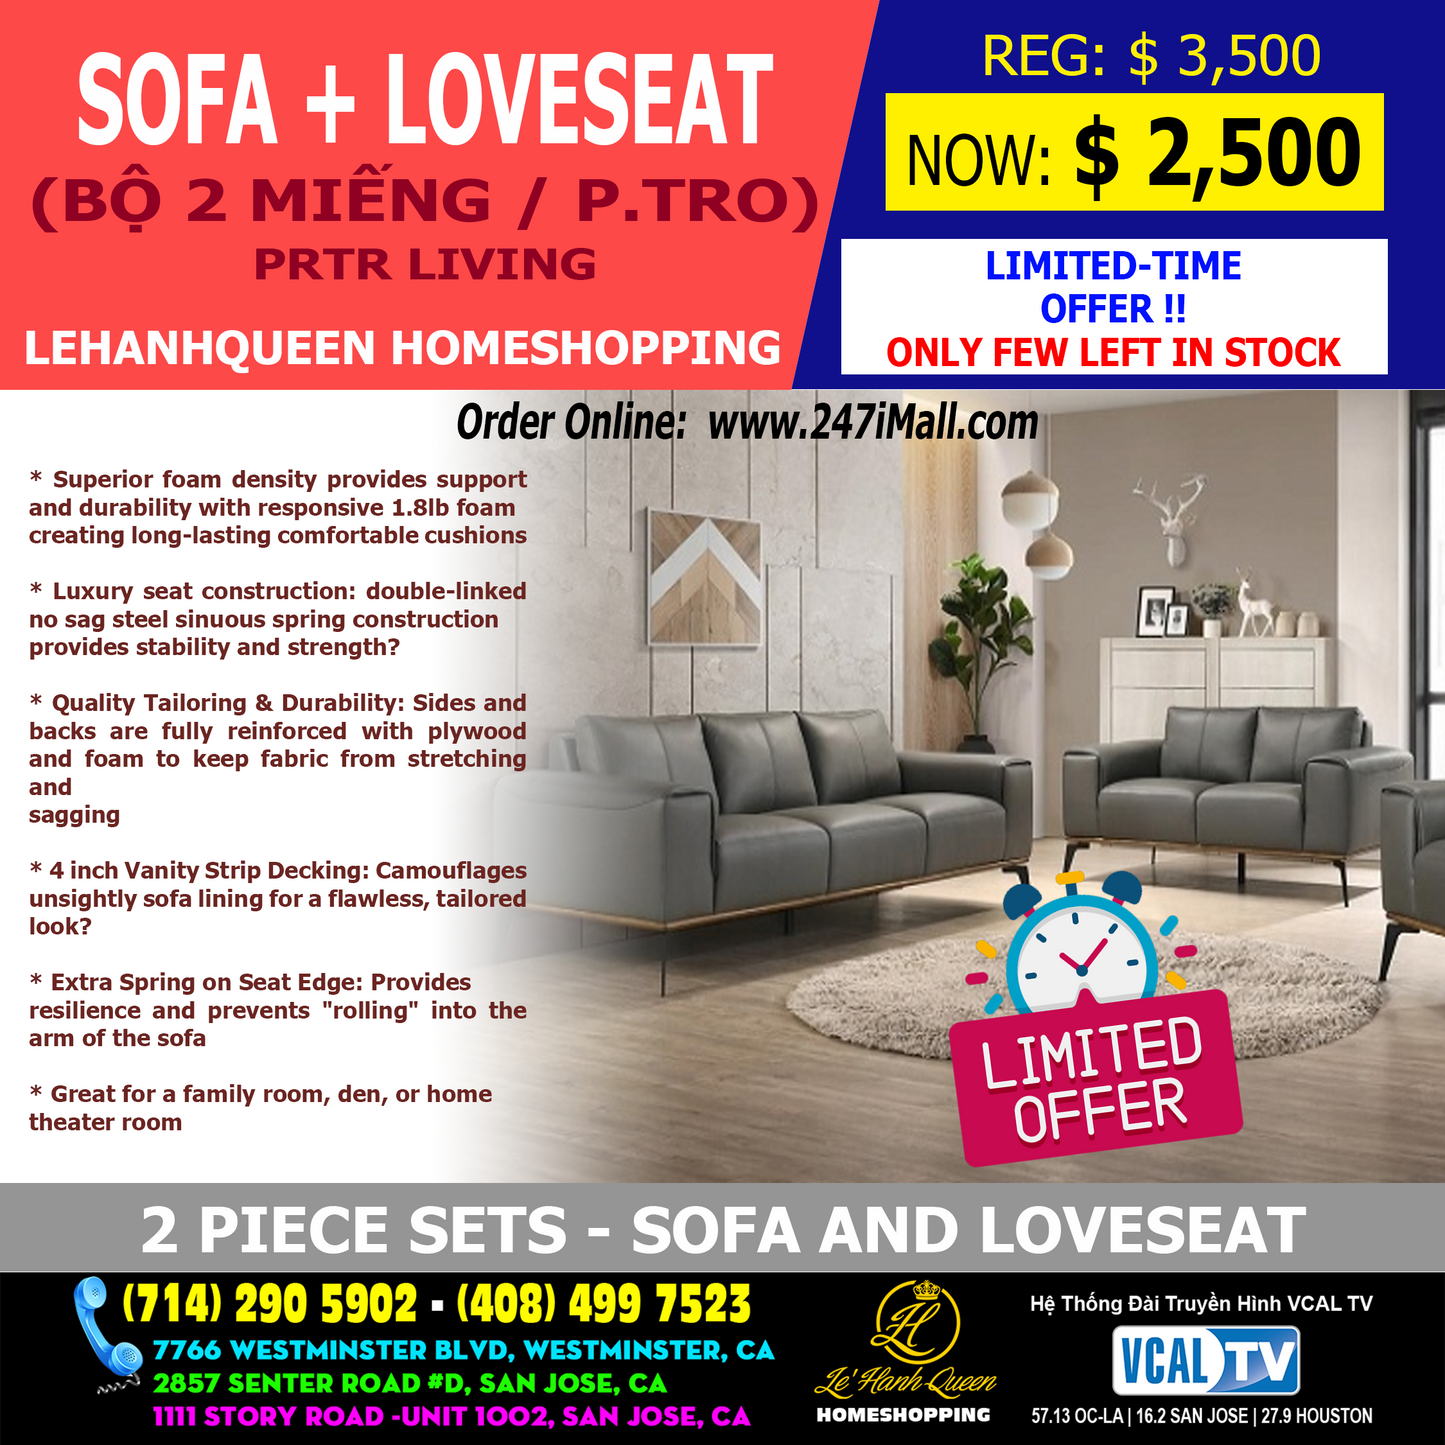 Bo Sofa Pietro (PORTER) Sofa + Love seat